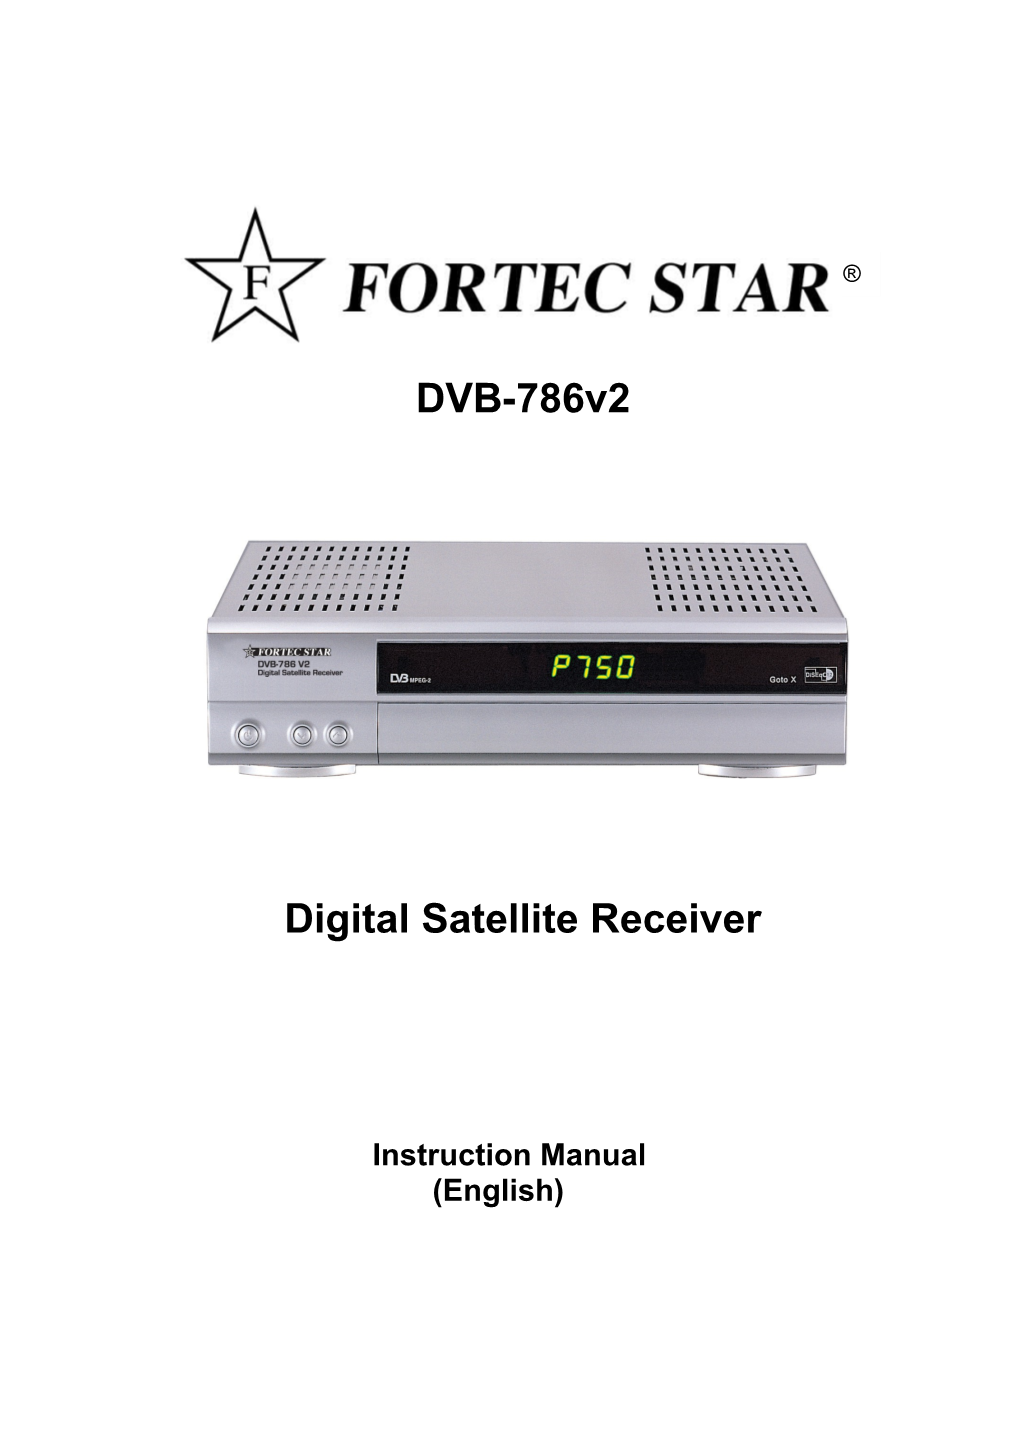 Fortec Star DVB-786V2